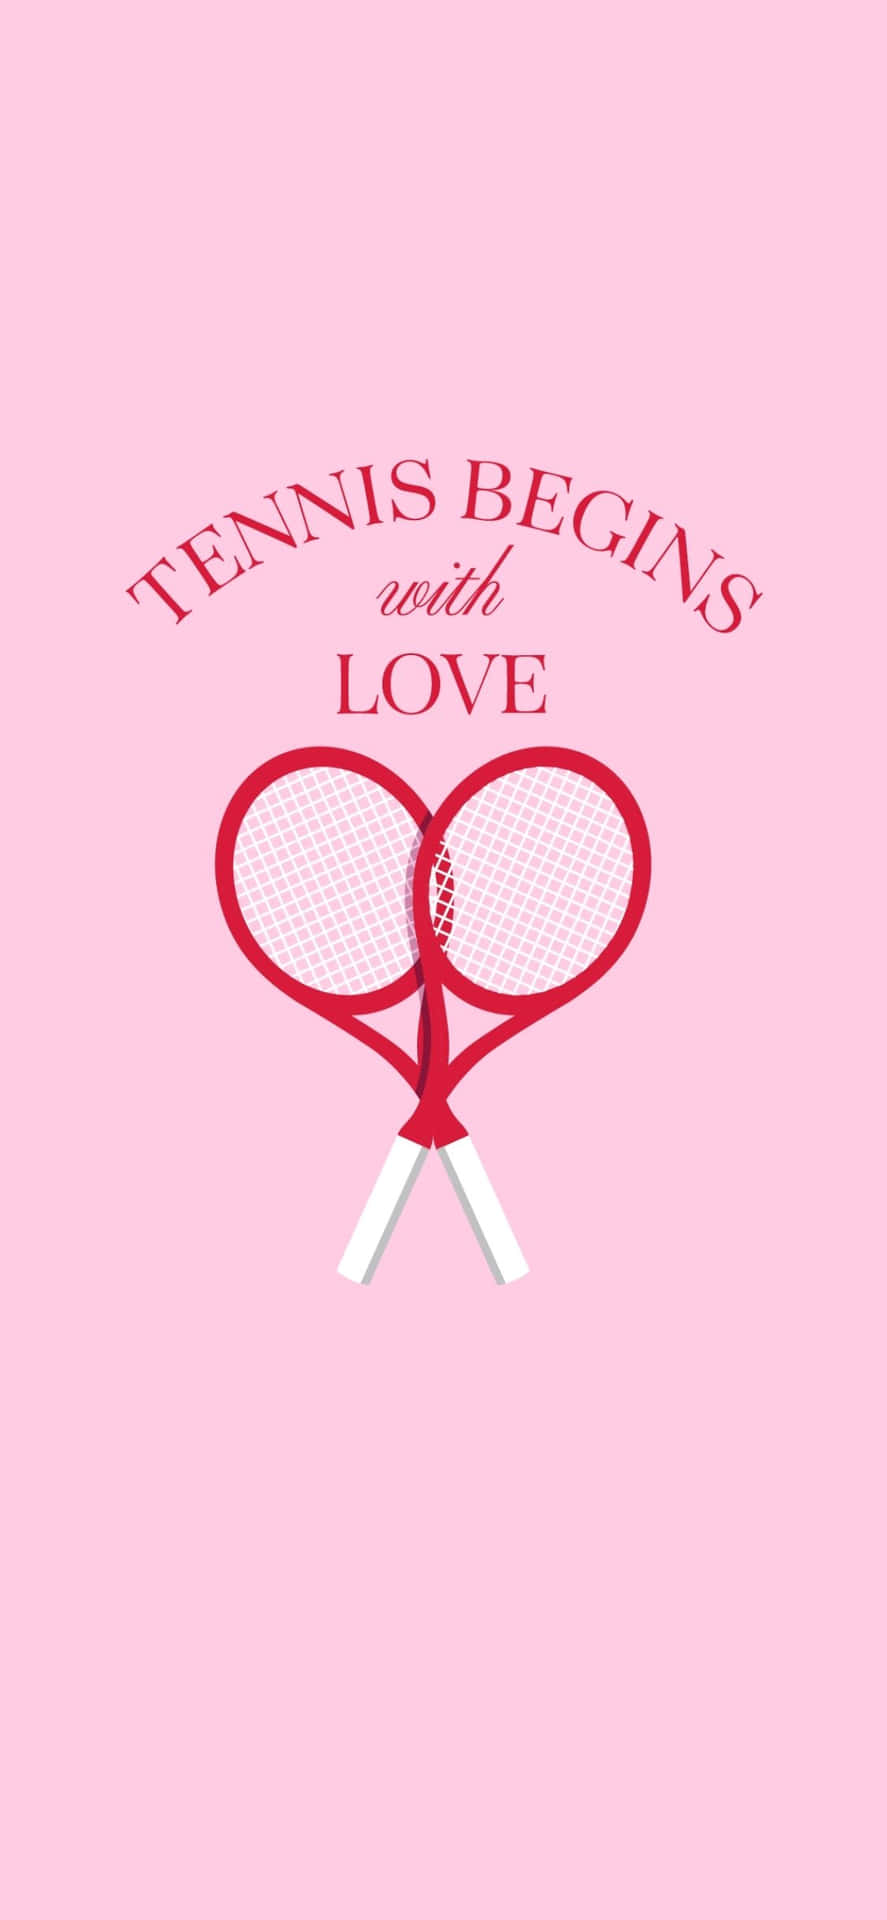 Sfondoper Iphone Xs Tennis.